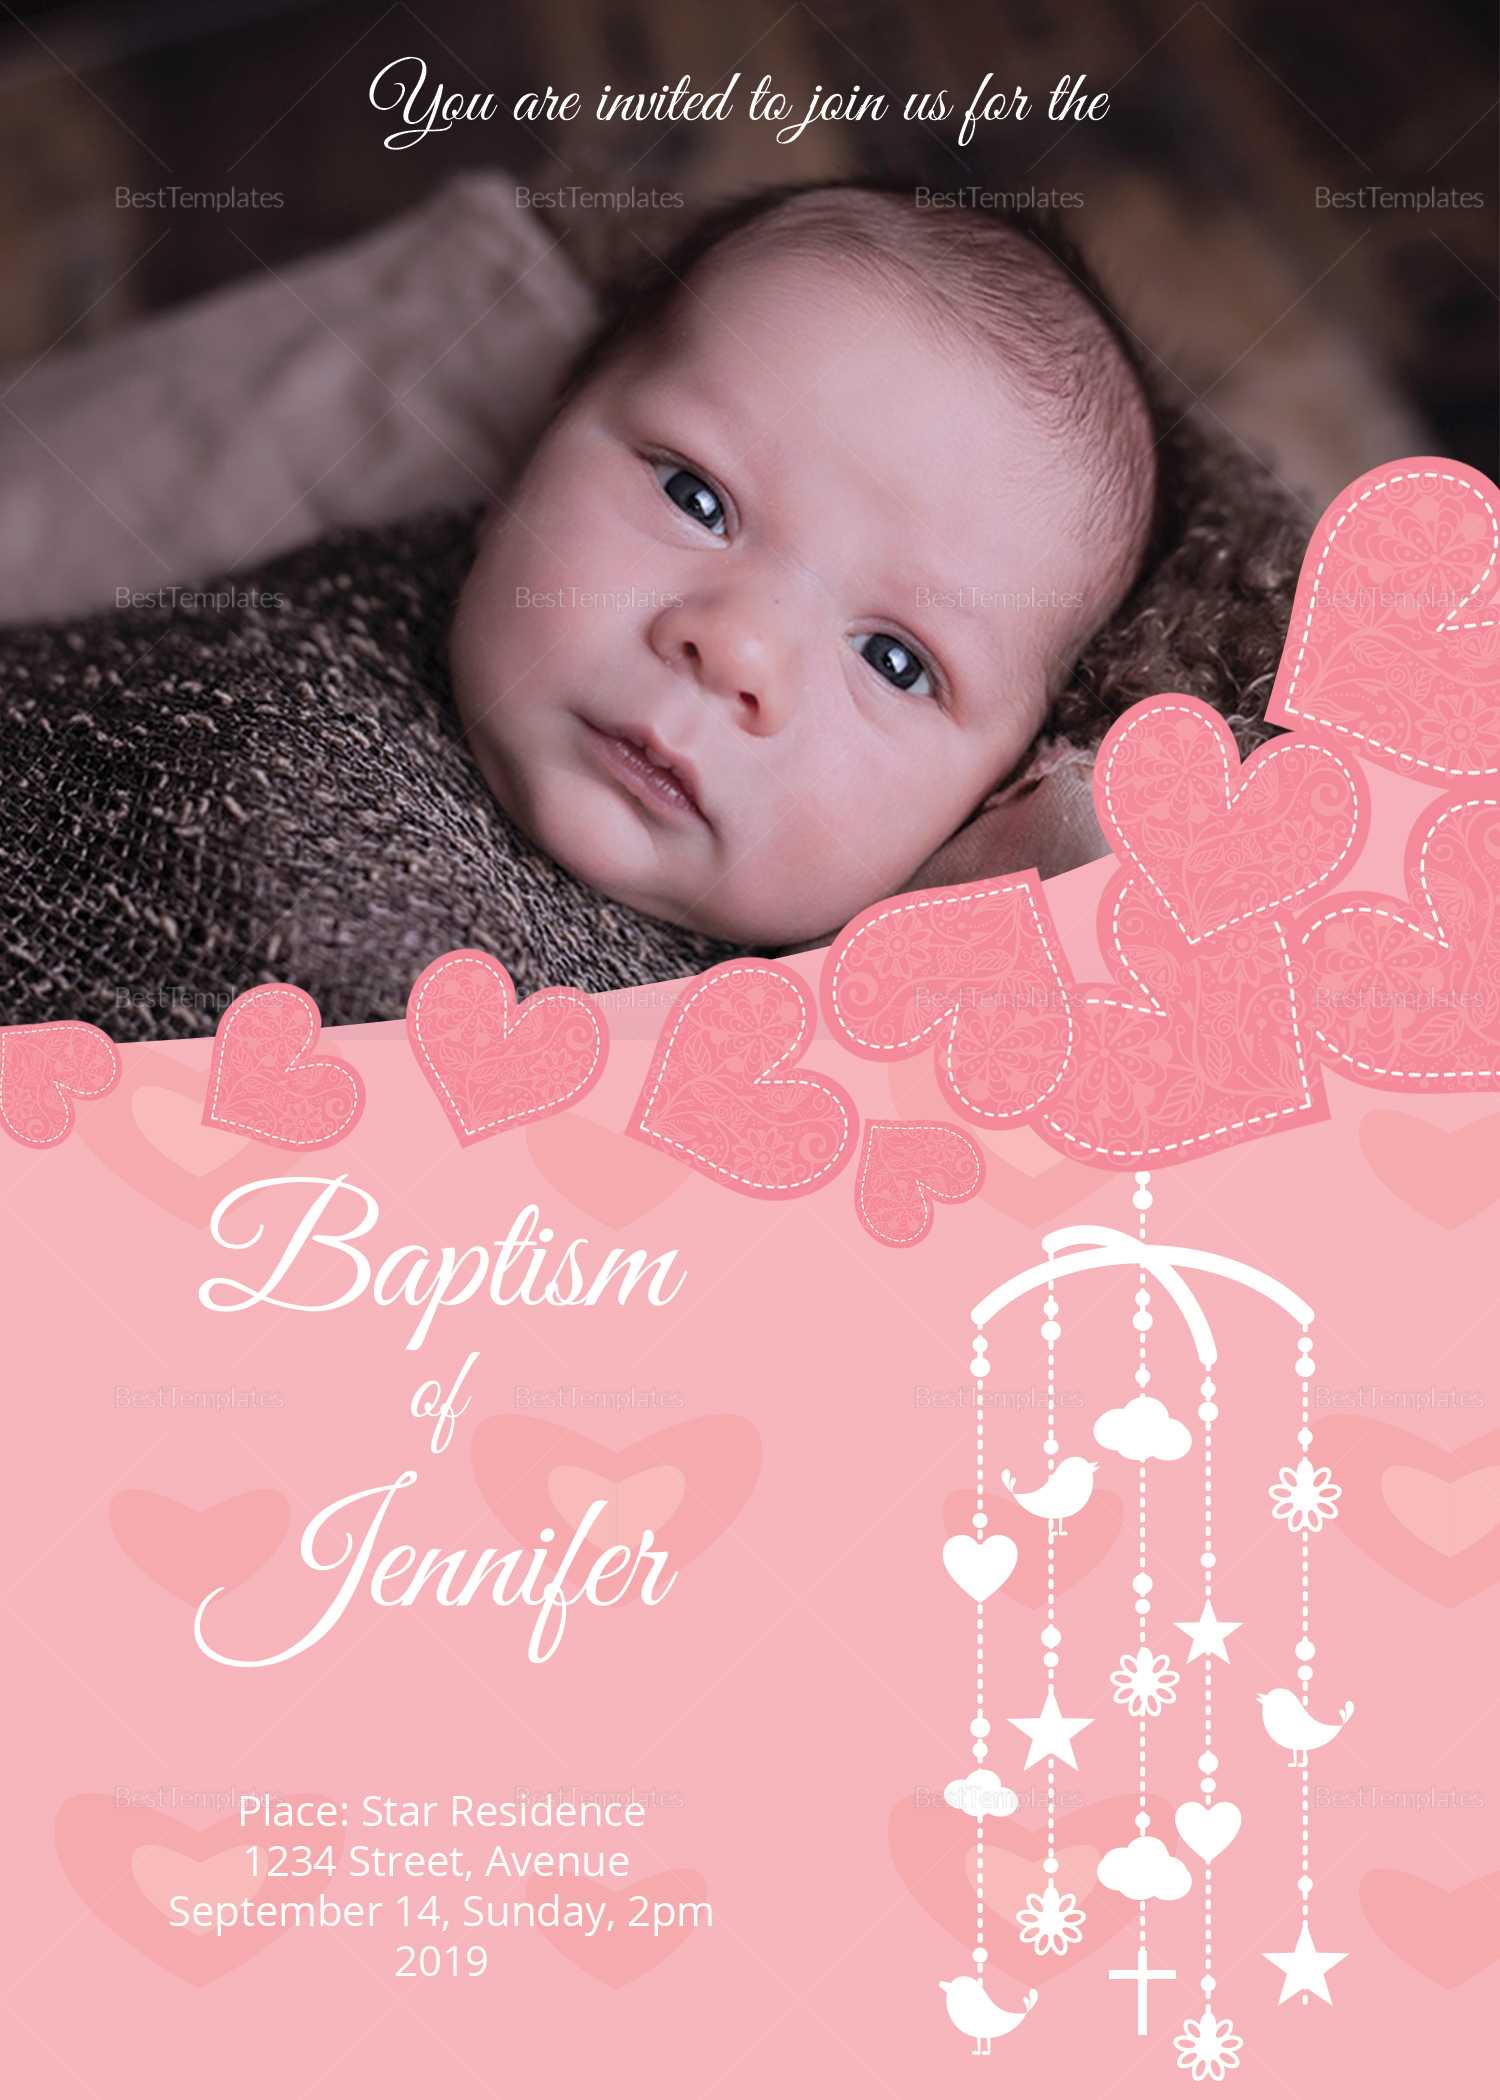 Printable Christening Baptism Invitation Card Template Within Baptism Invitation Card Template